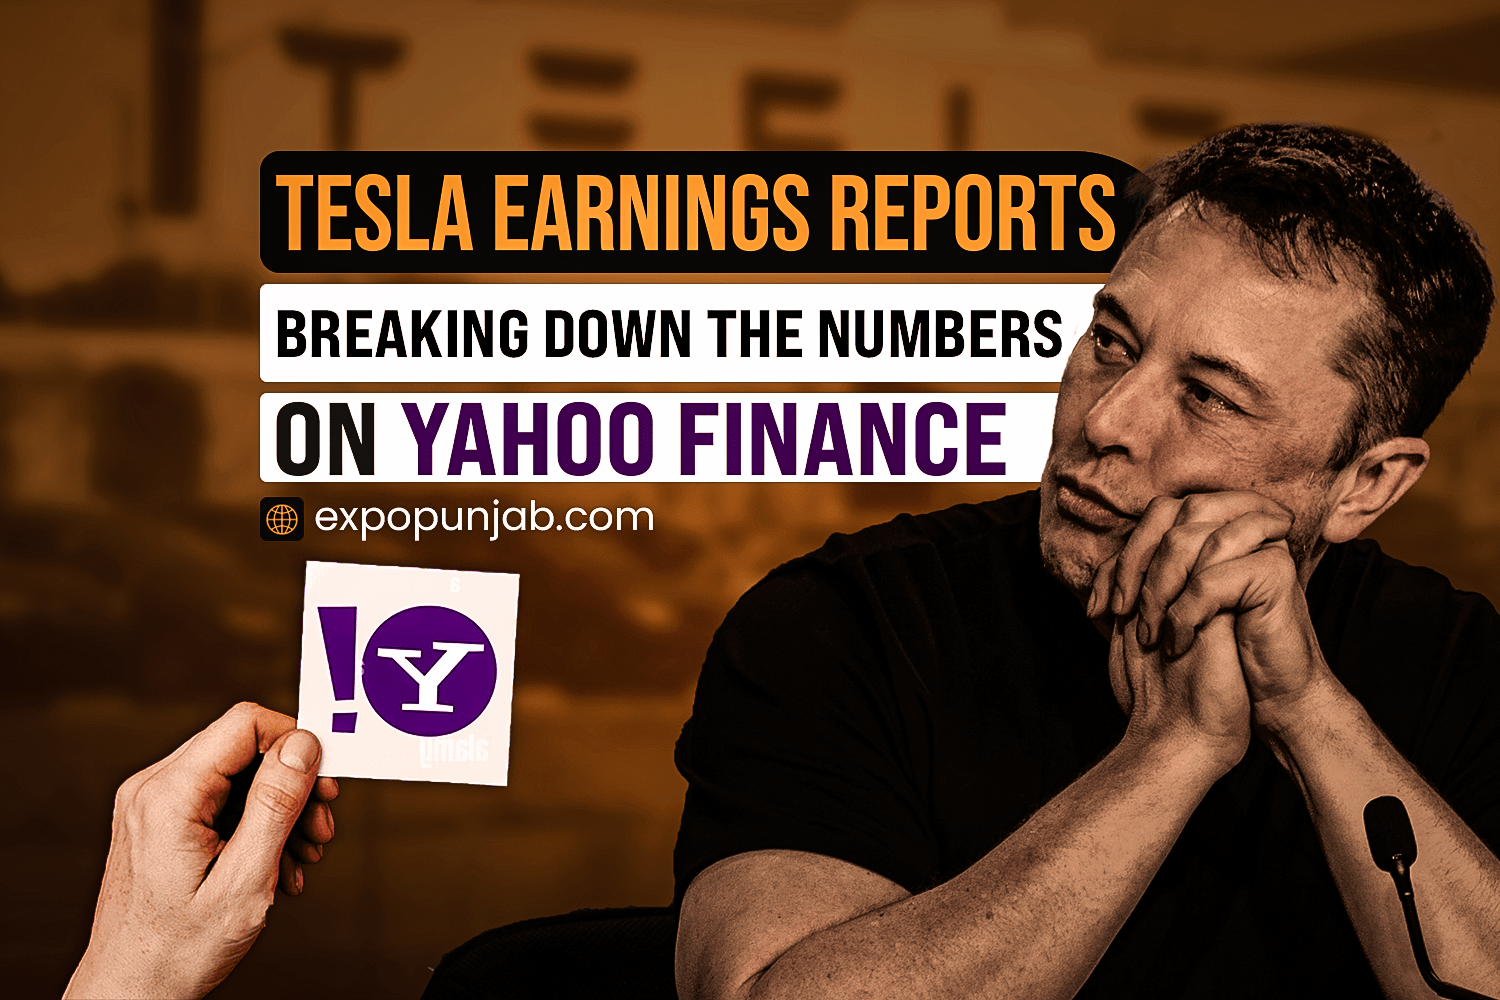 Tesla Earnings Reports: Breaking Down the Numbers on Yahoo Finance | Expopunjab